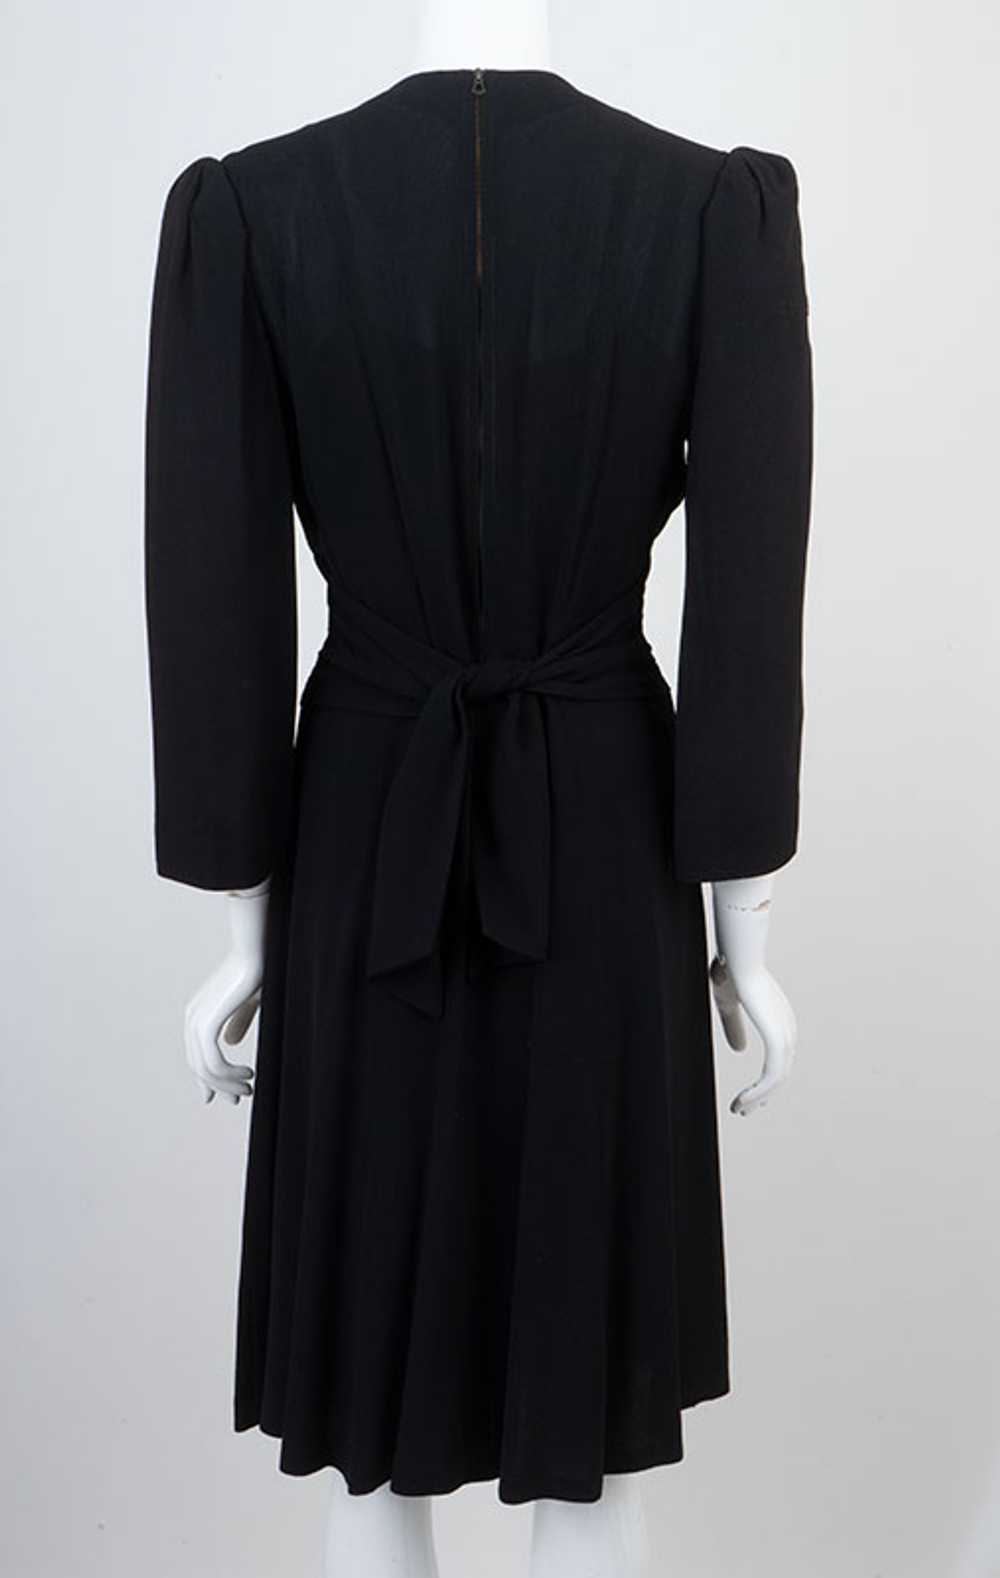 Stunning 1940s Crepe Rayon Evening Dress - image 7